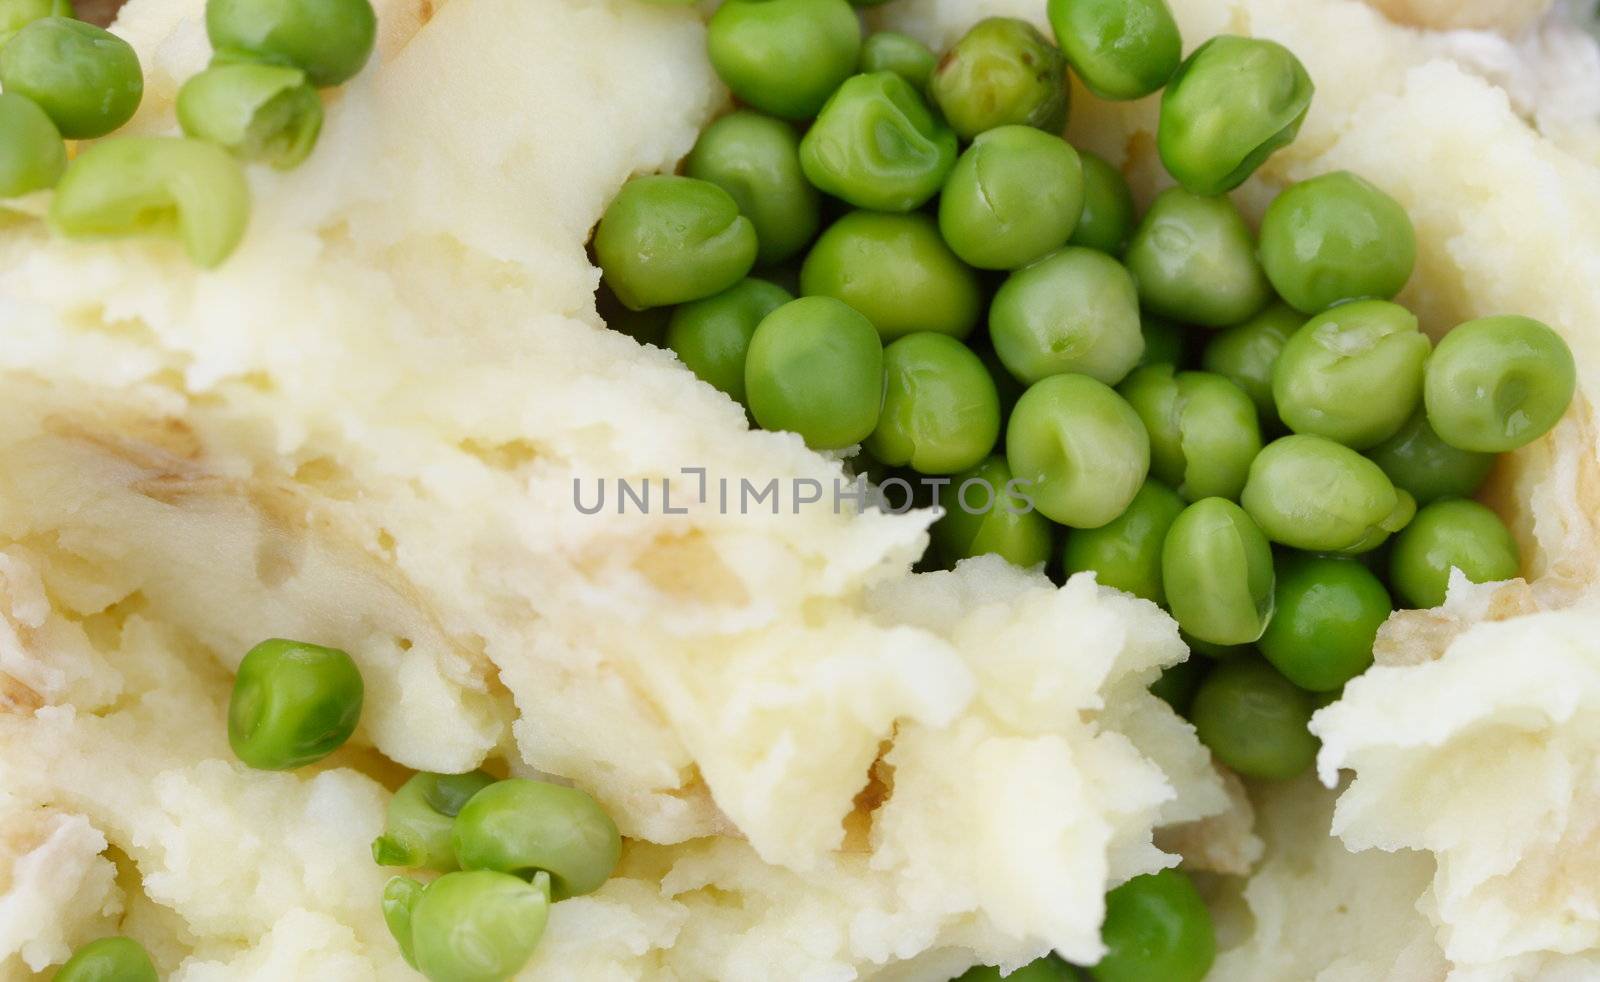 mashed potato and peas